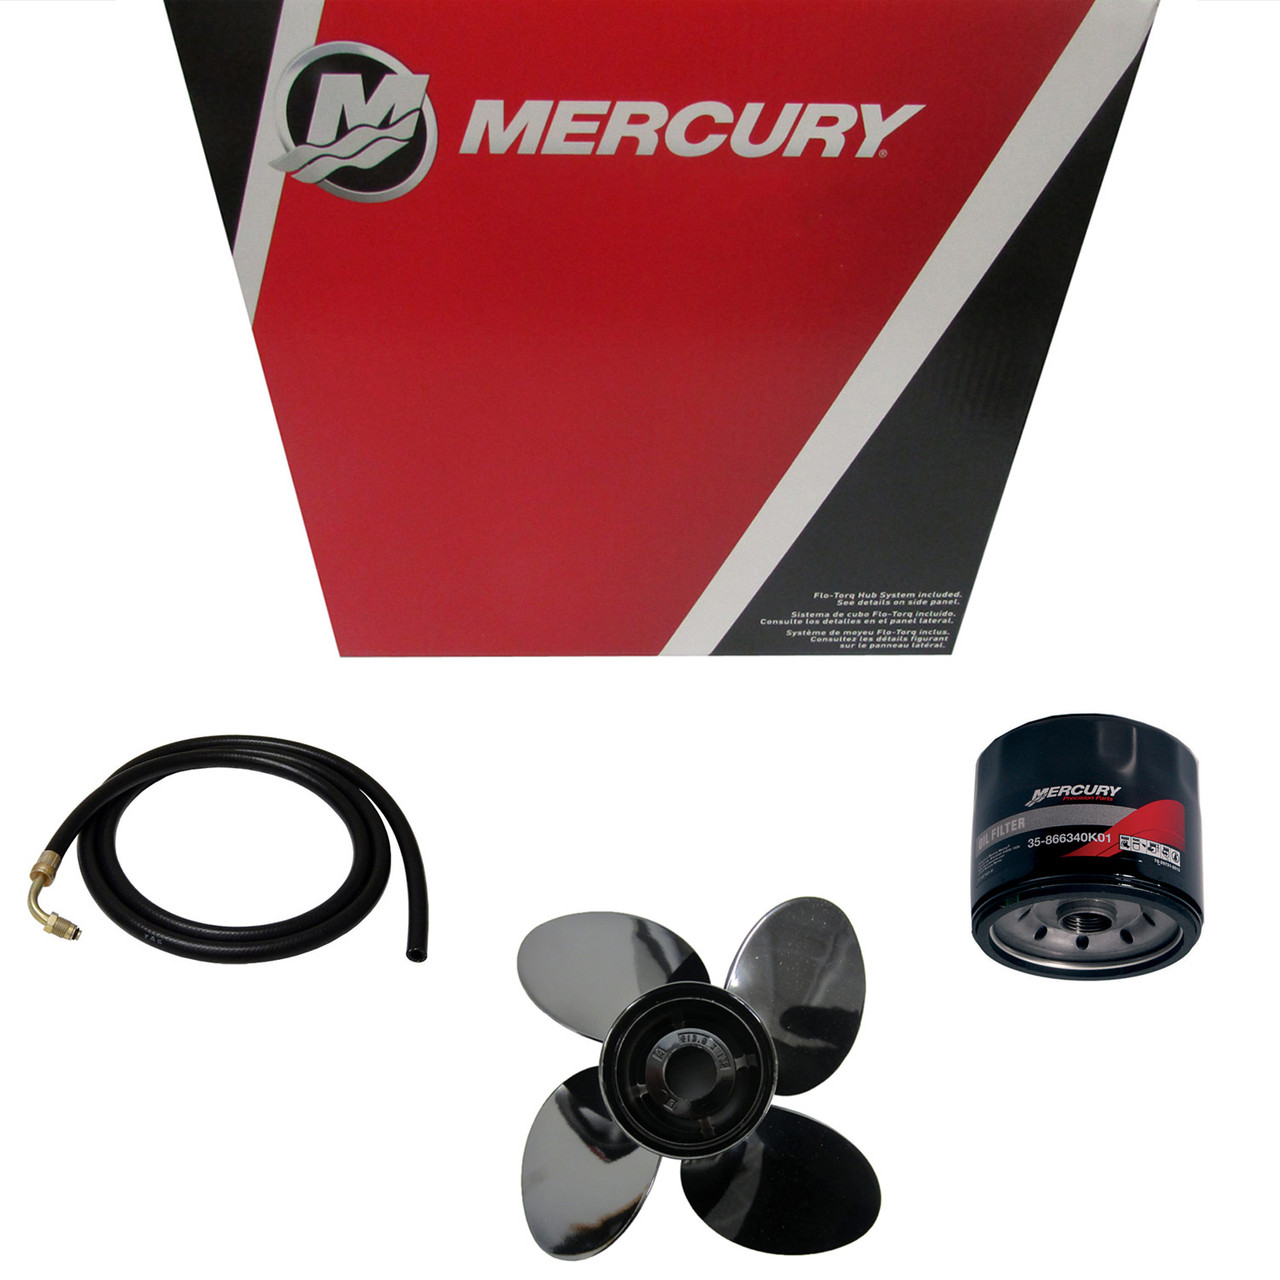 Mercury Marine / Mercruiser New OEM Ignition Coil, 339-879147T71